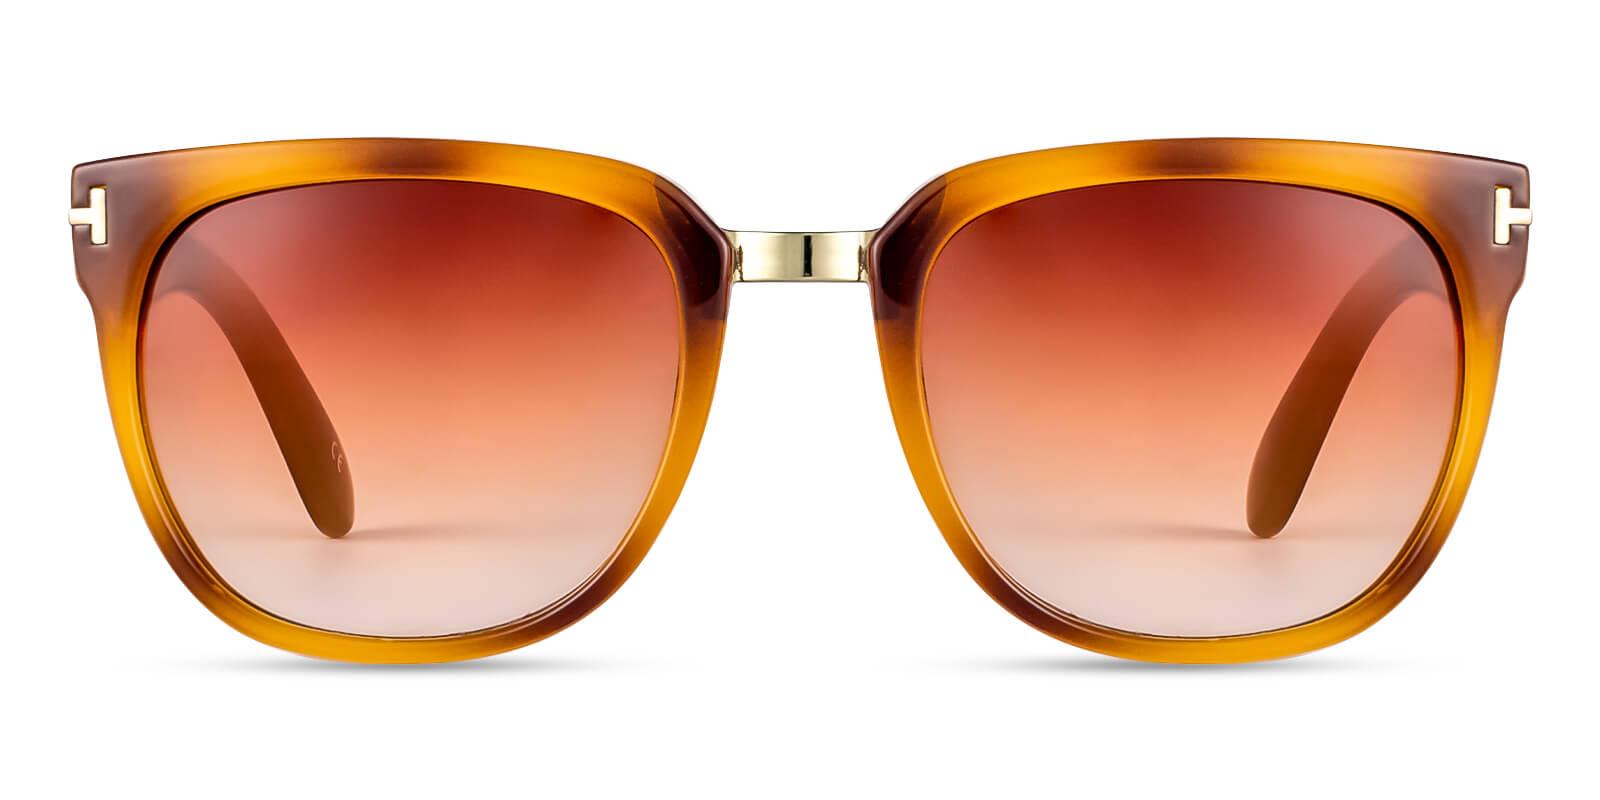 Mars Pattern Acetate Sunglasses , UniversalBridgeFit Frames from ABBE Glasses